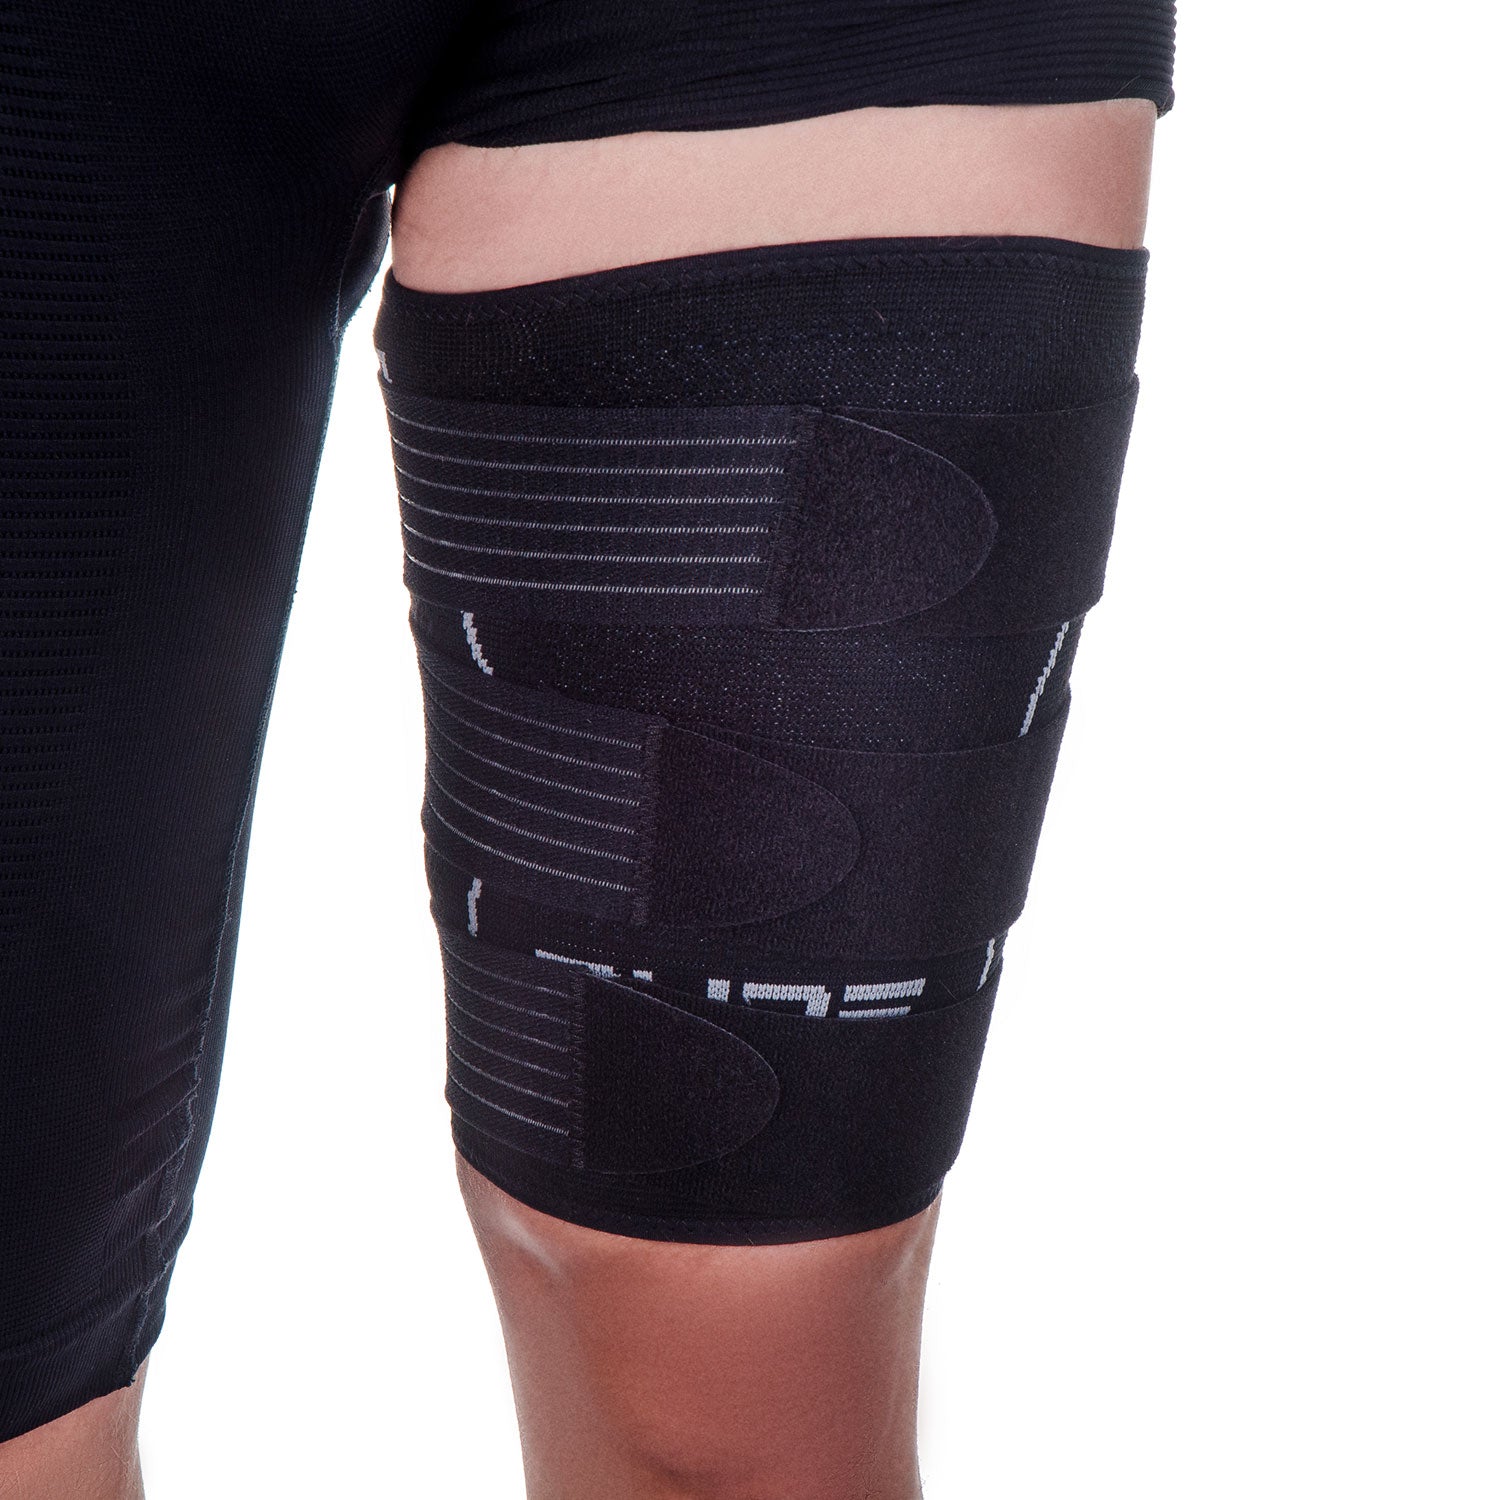  Thigh Compression Sleeve – Hamstring, Quadriceps